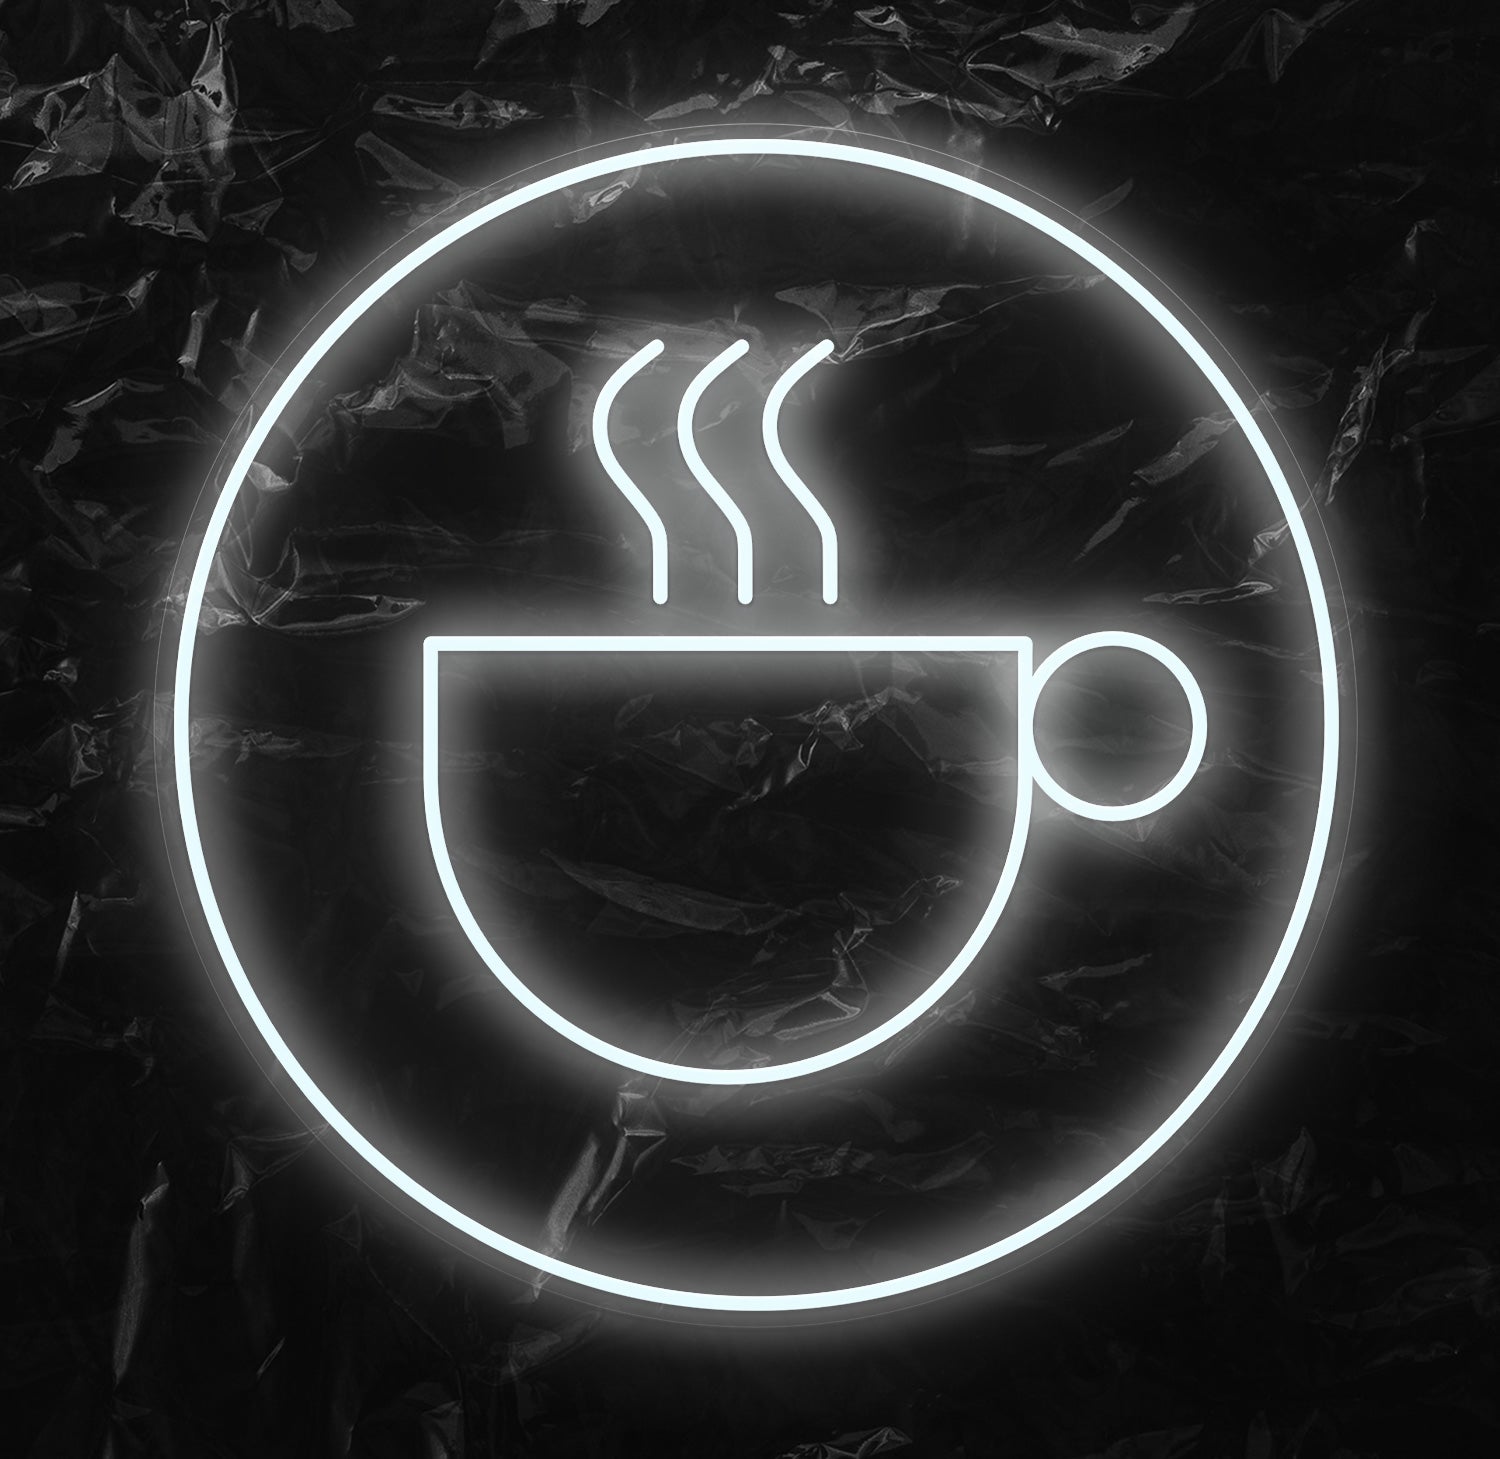 " Kaffee Cappucino" LED Neonschild - NEONEVERGLOW